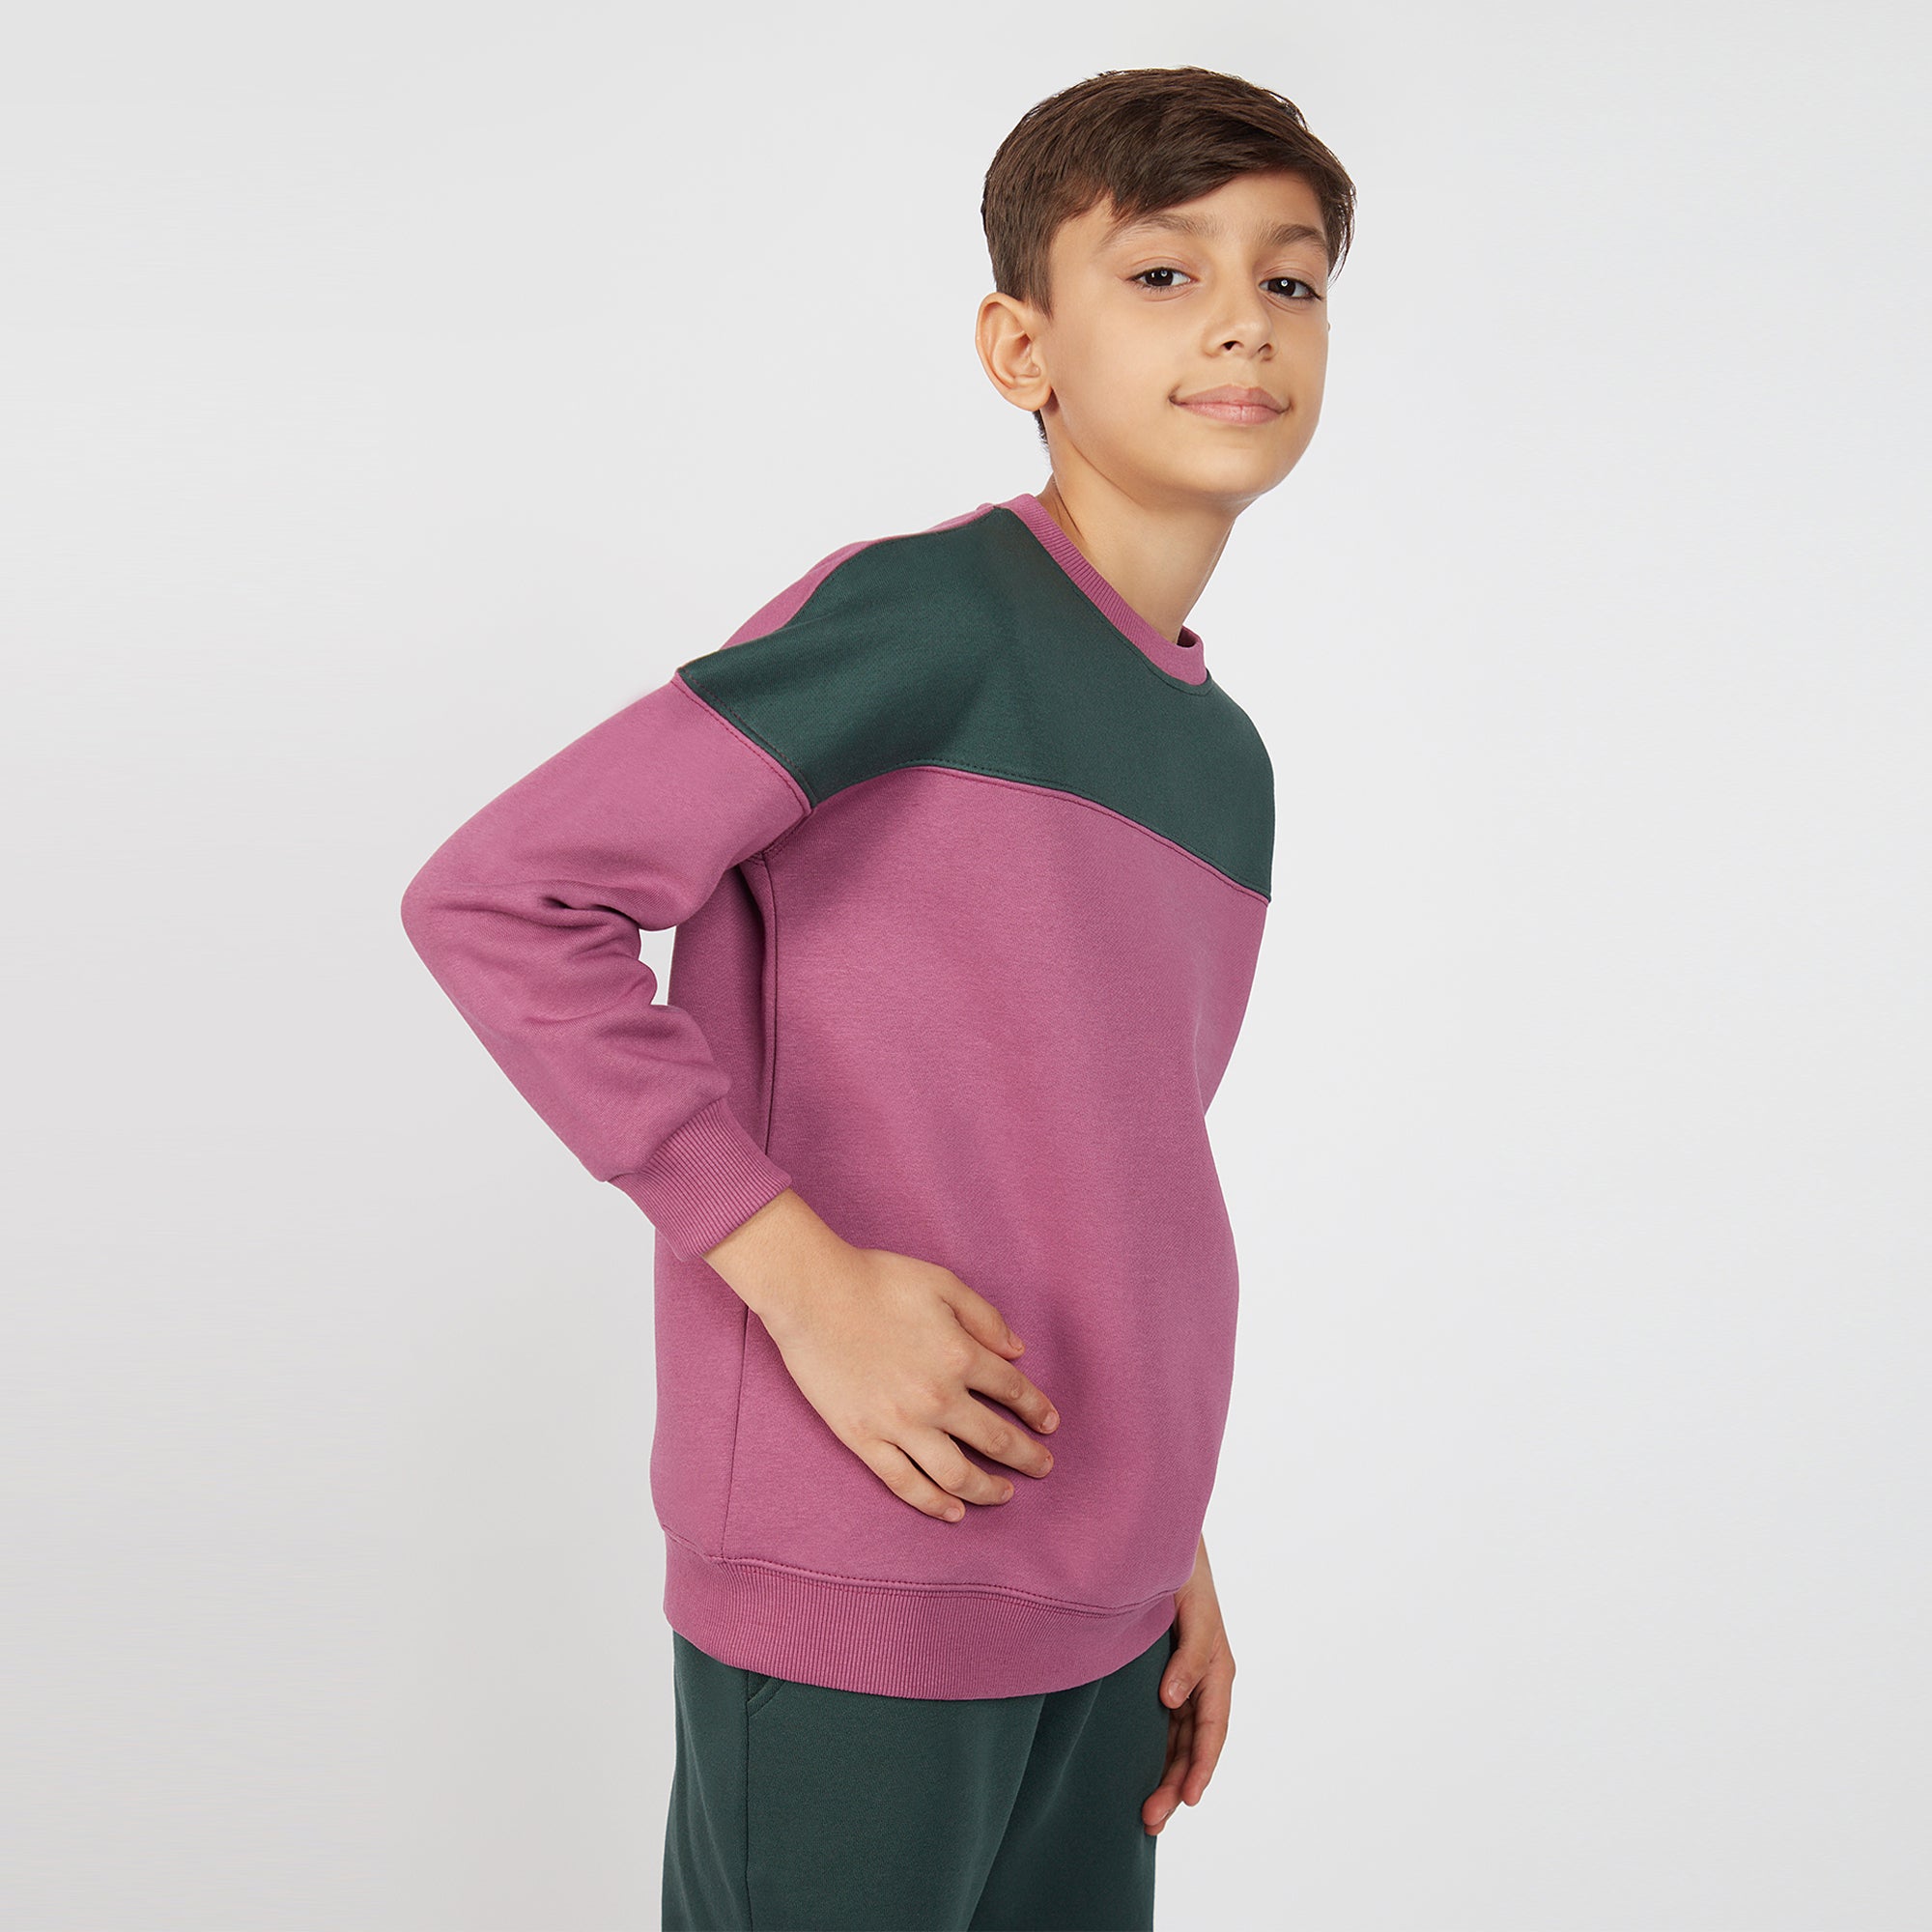 Bombay High Boy's Purple Color Block Knit Sweatshirt